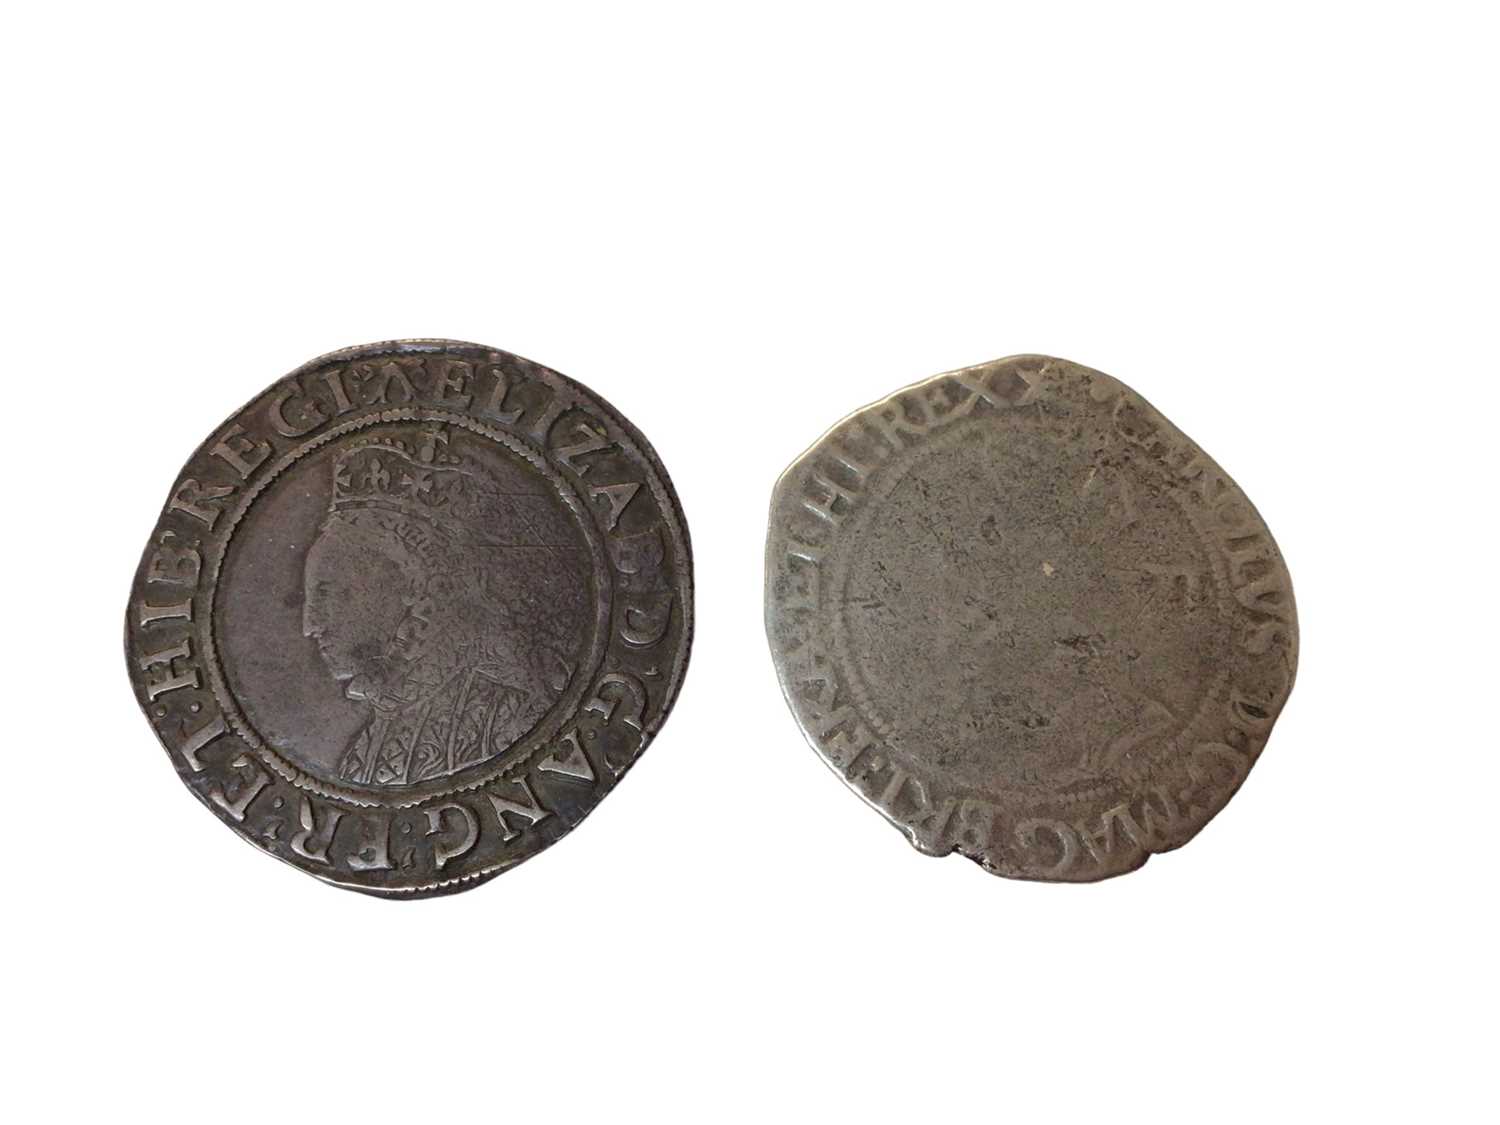 G.B. - Silver hammered coins to include Elizabeth I Shilling m/m 'A' circa 1582-1584 (N.B. Striking